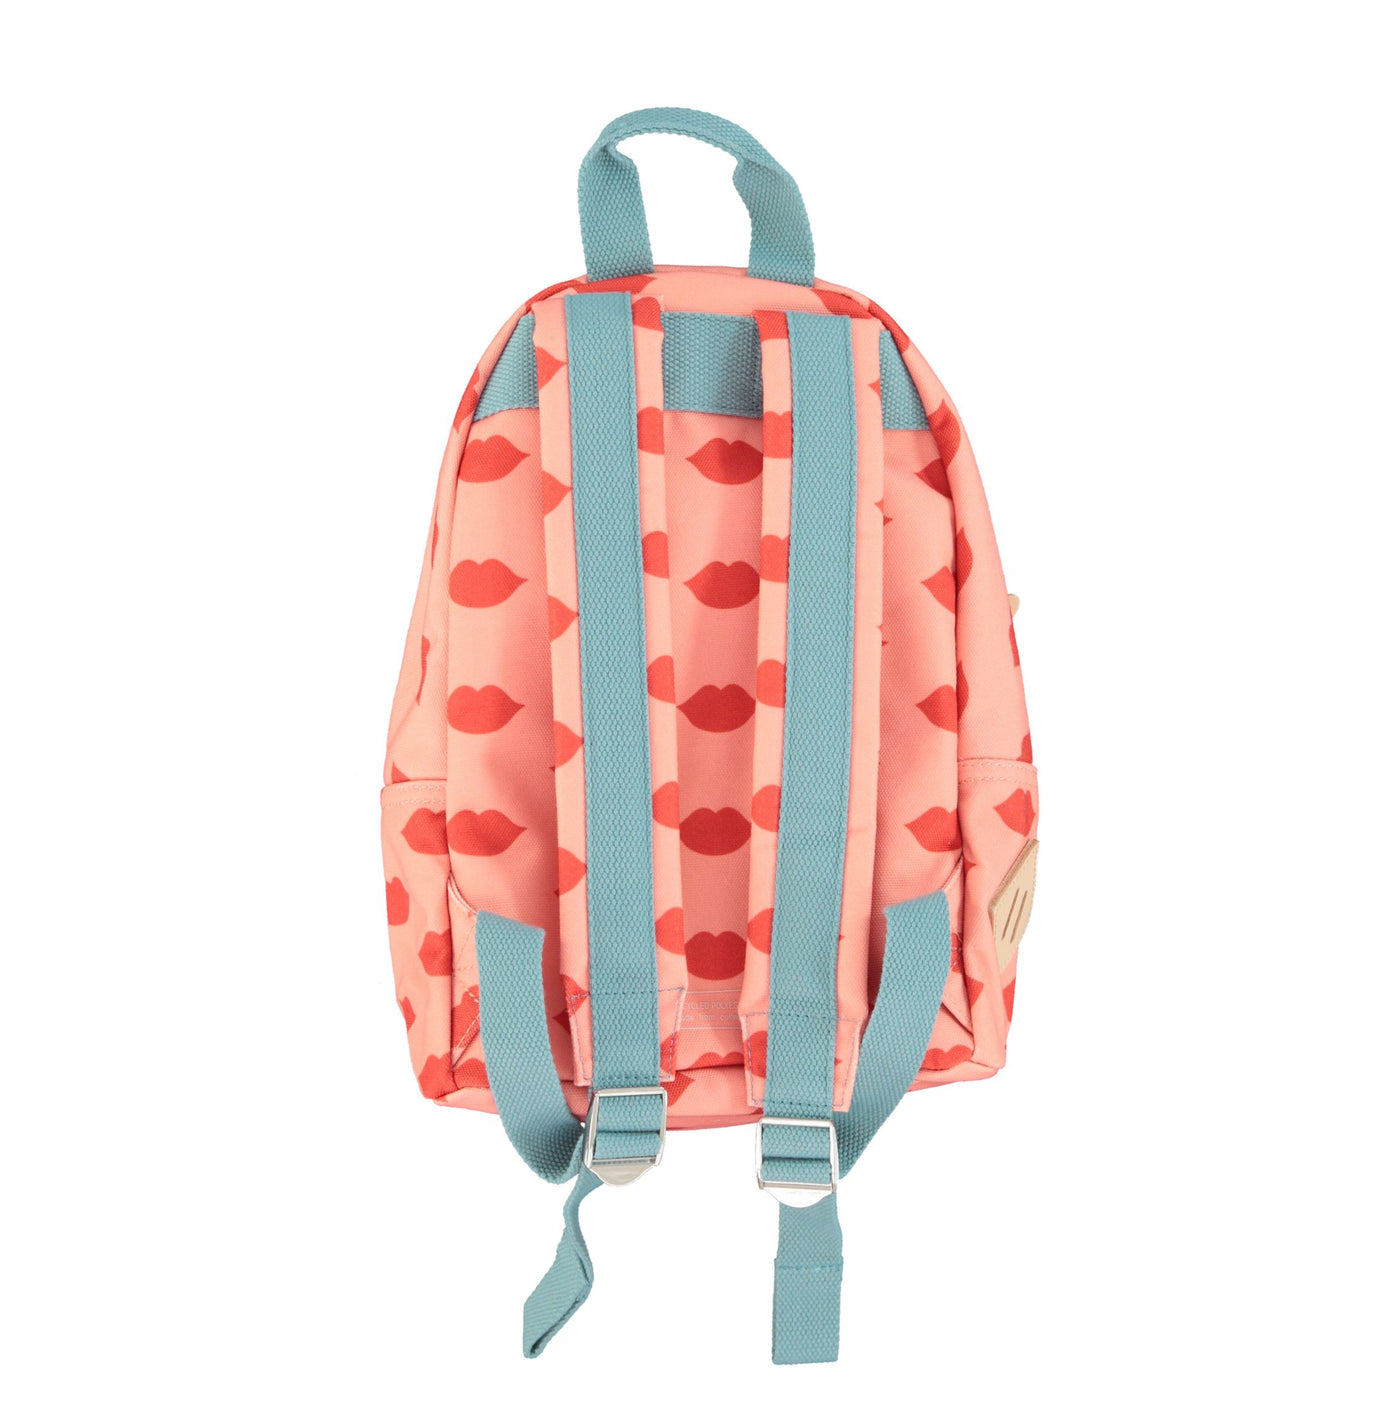 Piupiuchick backpack light pink w/ red lips